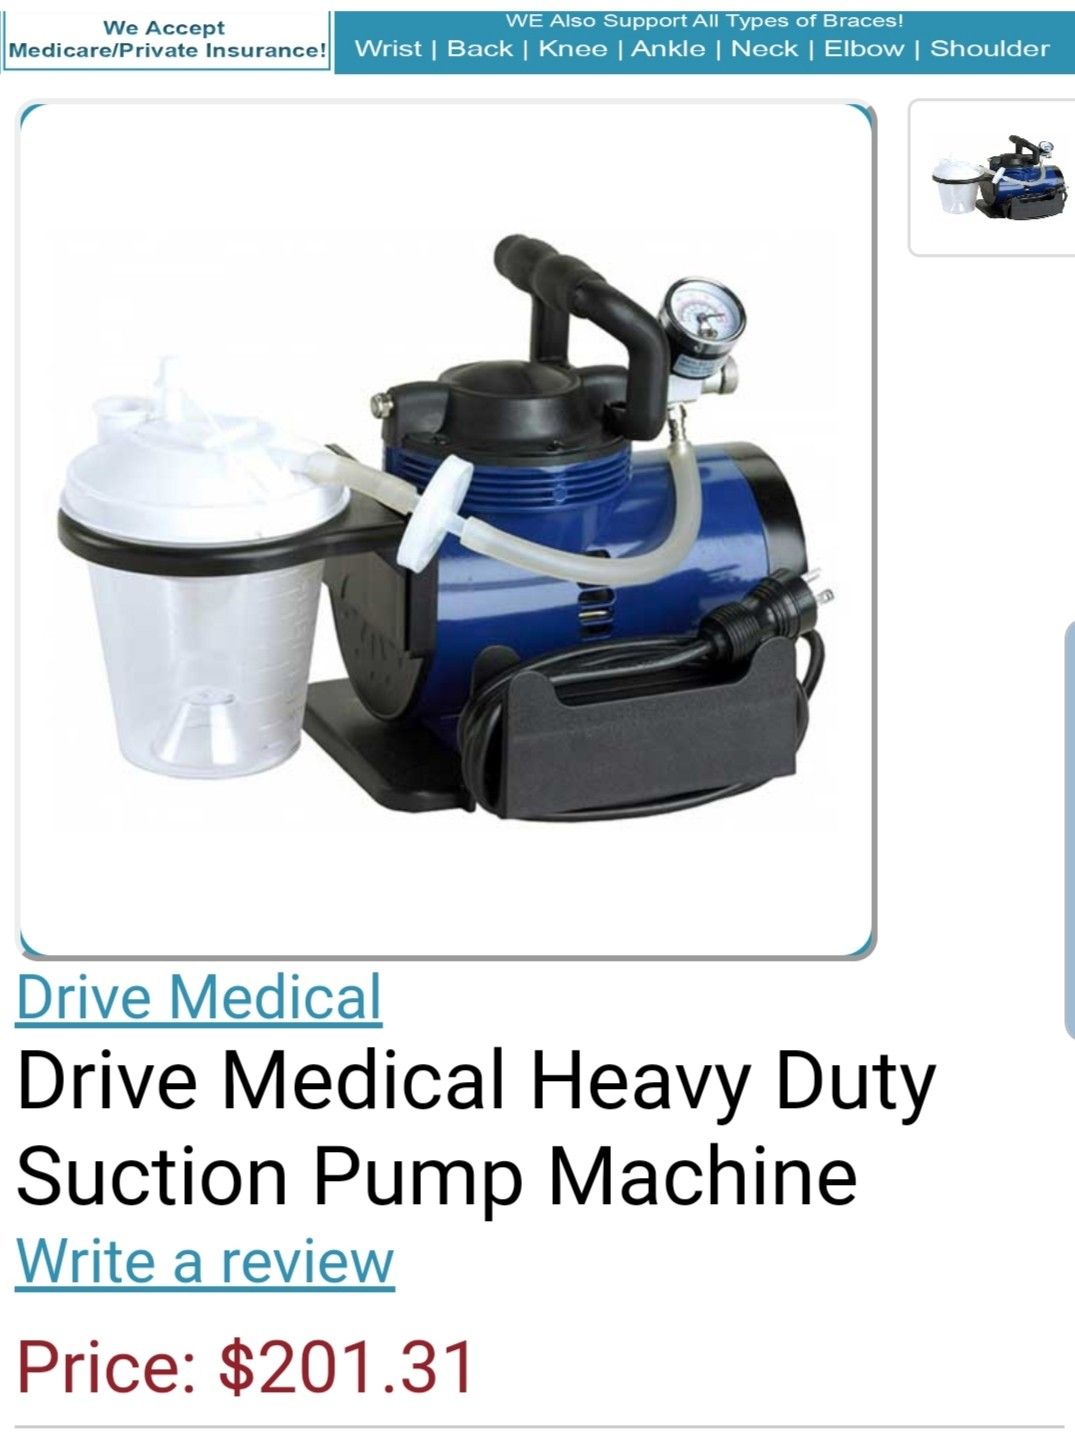 Heavy Duty Suction Pump